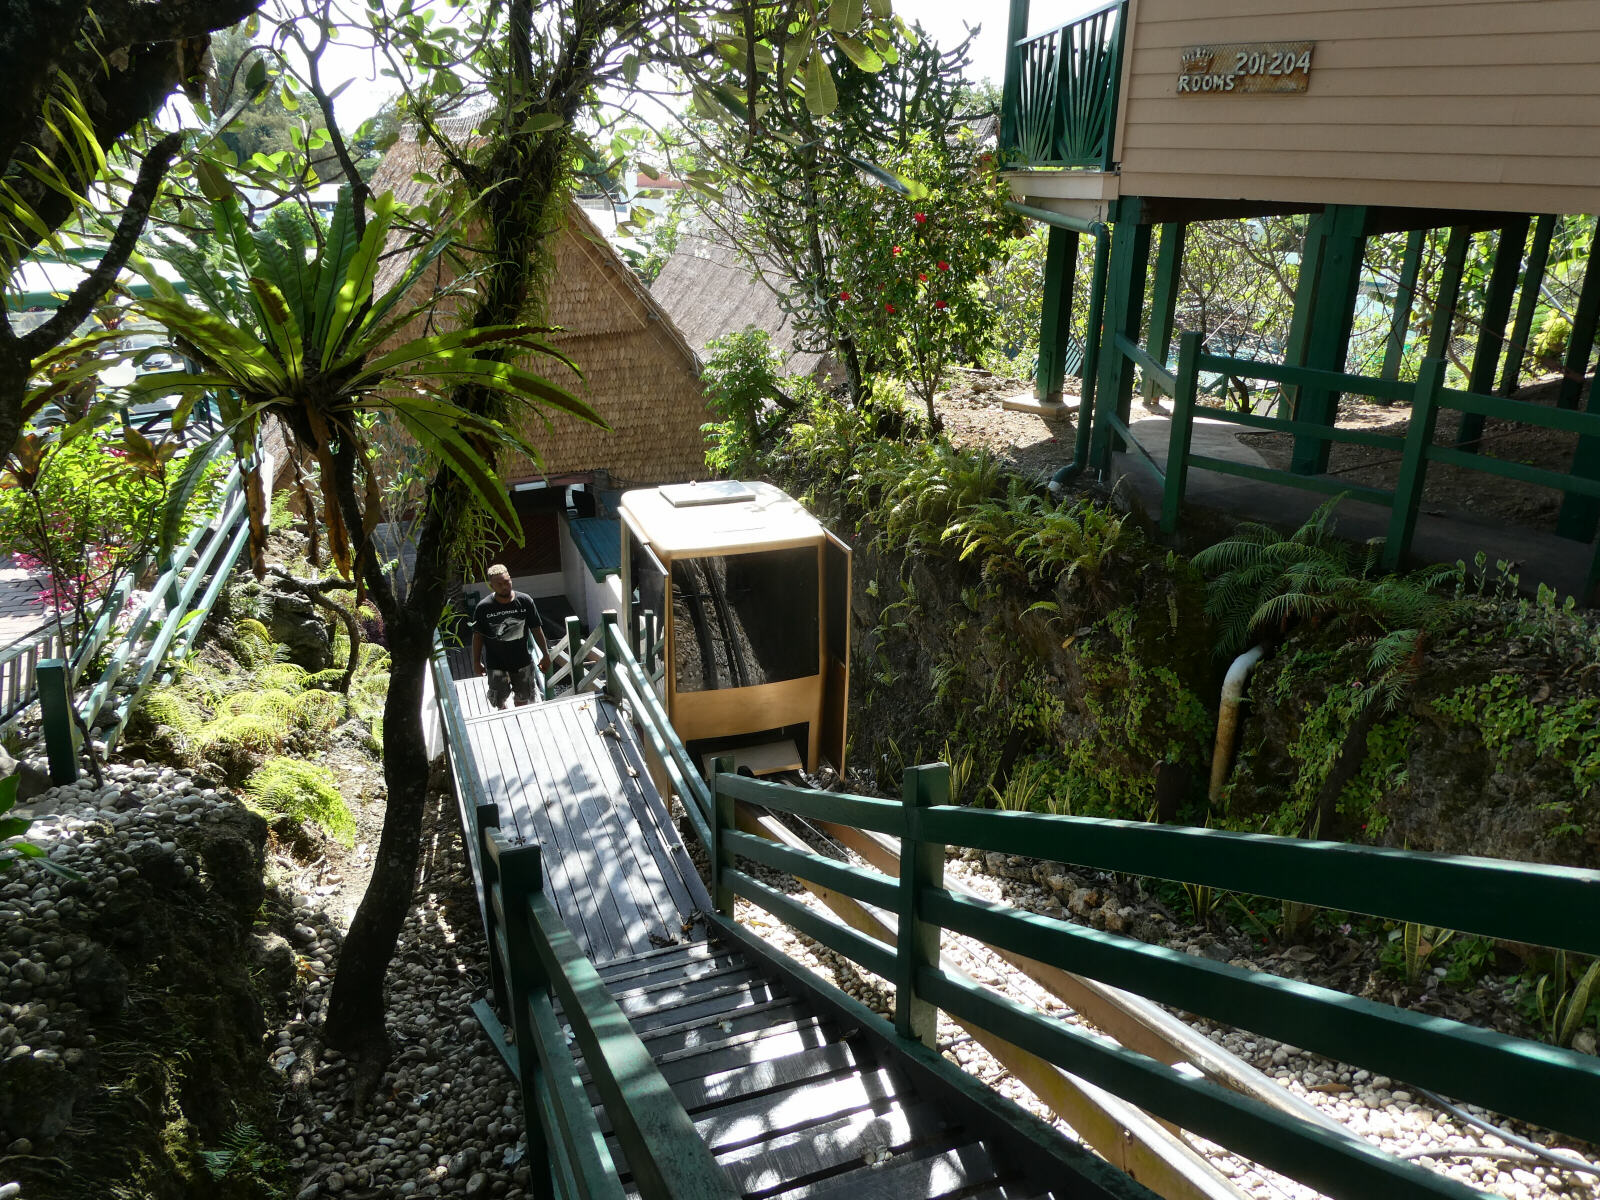 The funicular railway at King Solomon hotel, Honiara